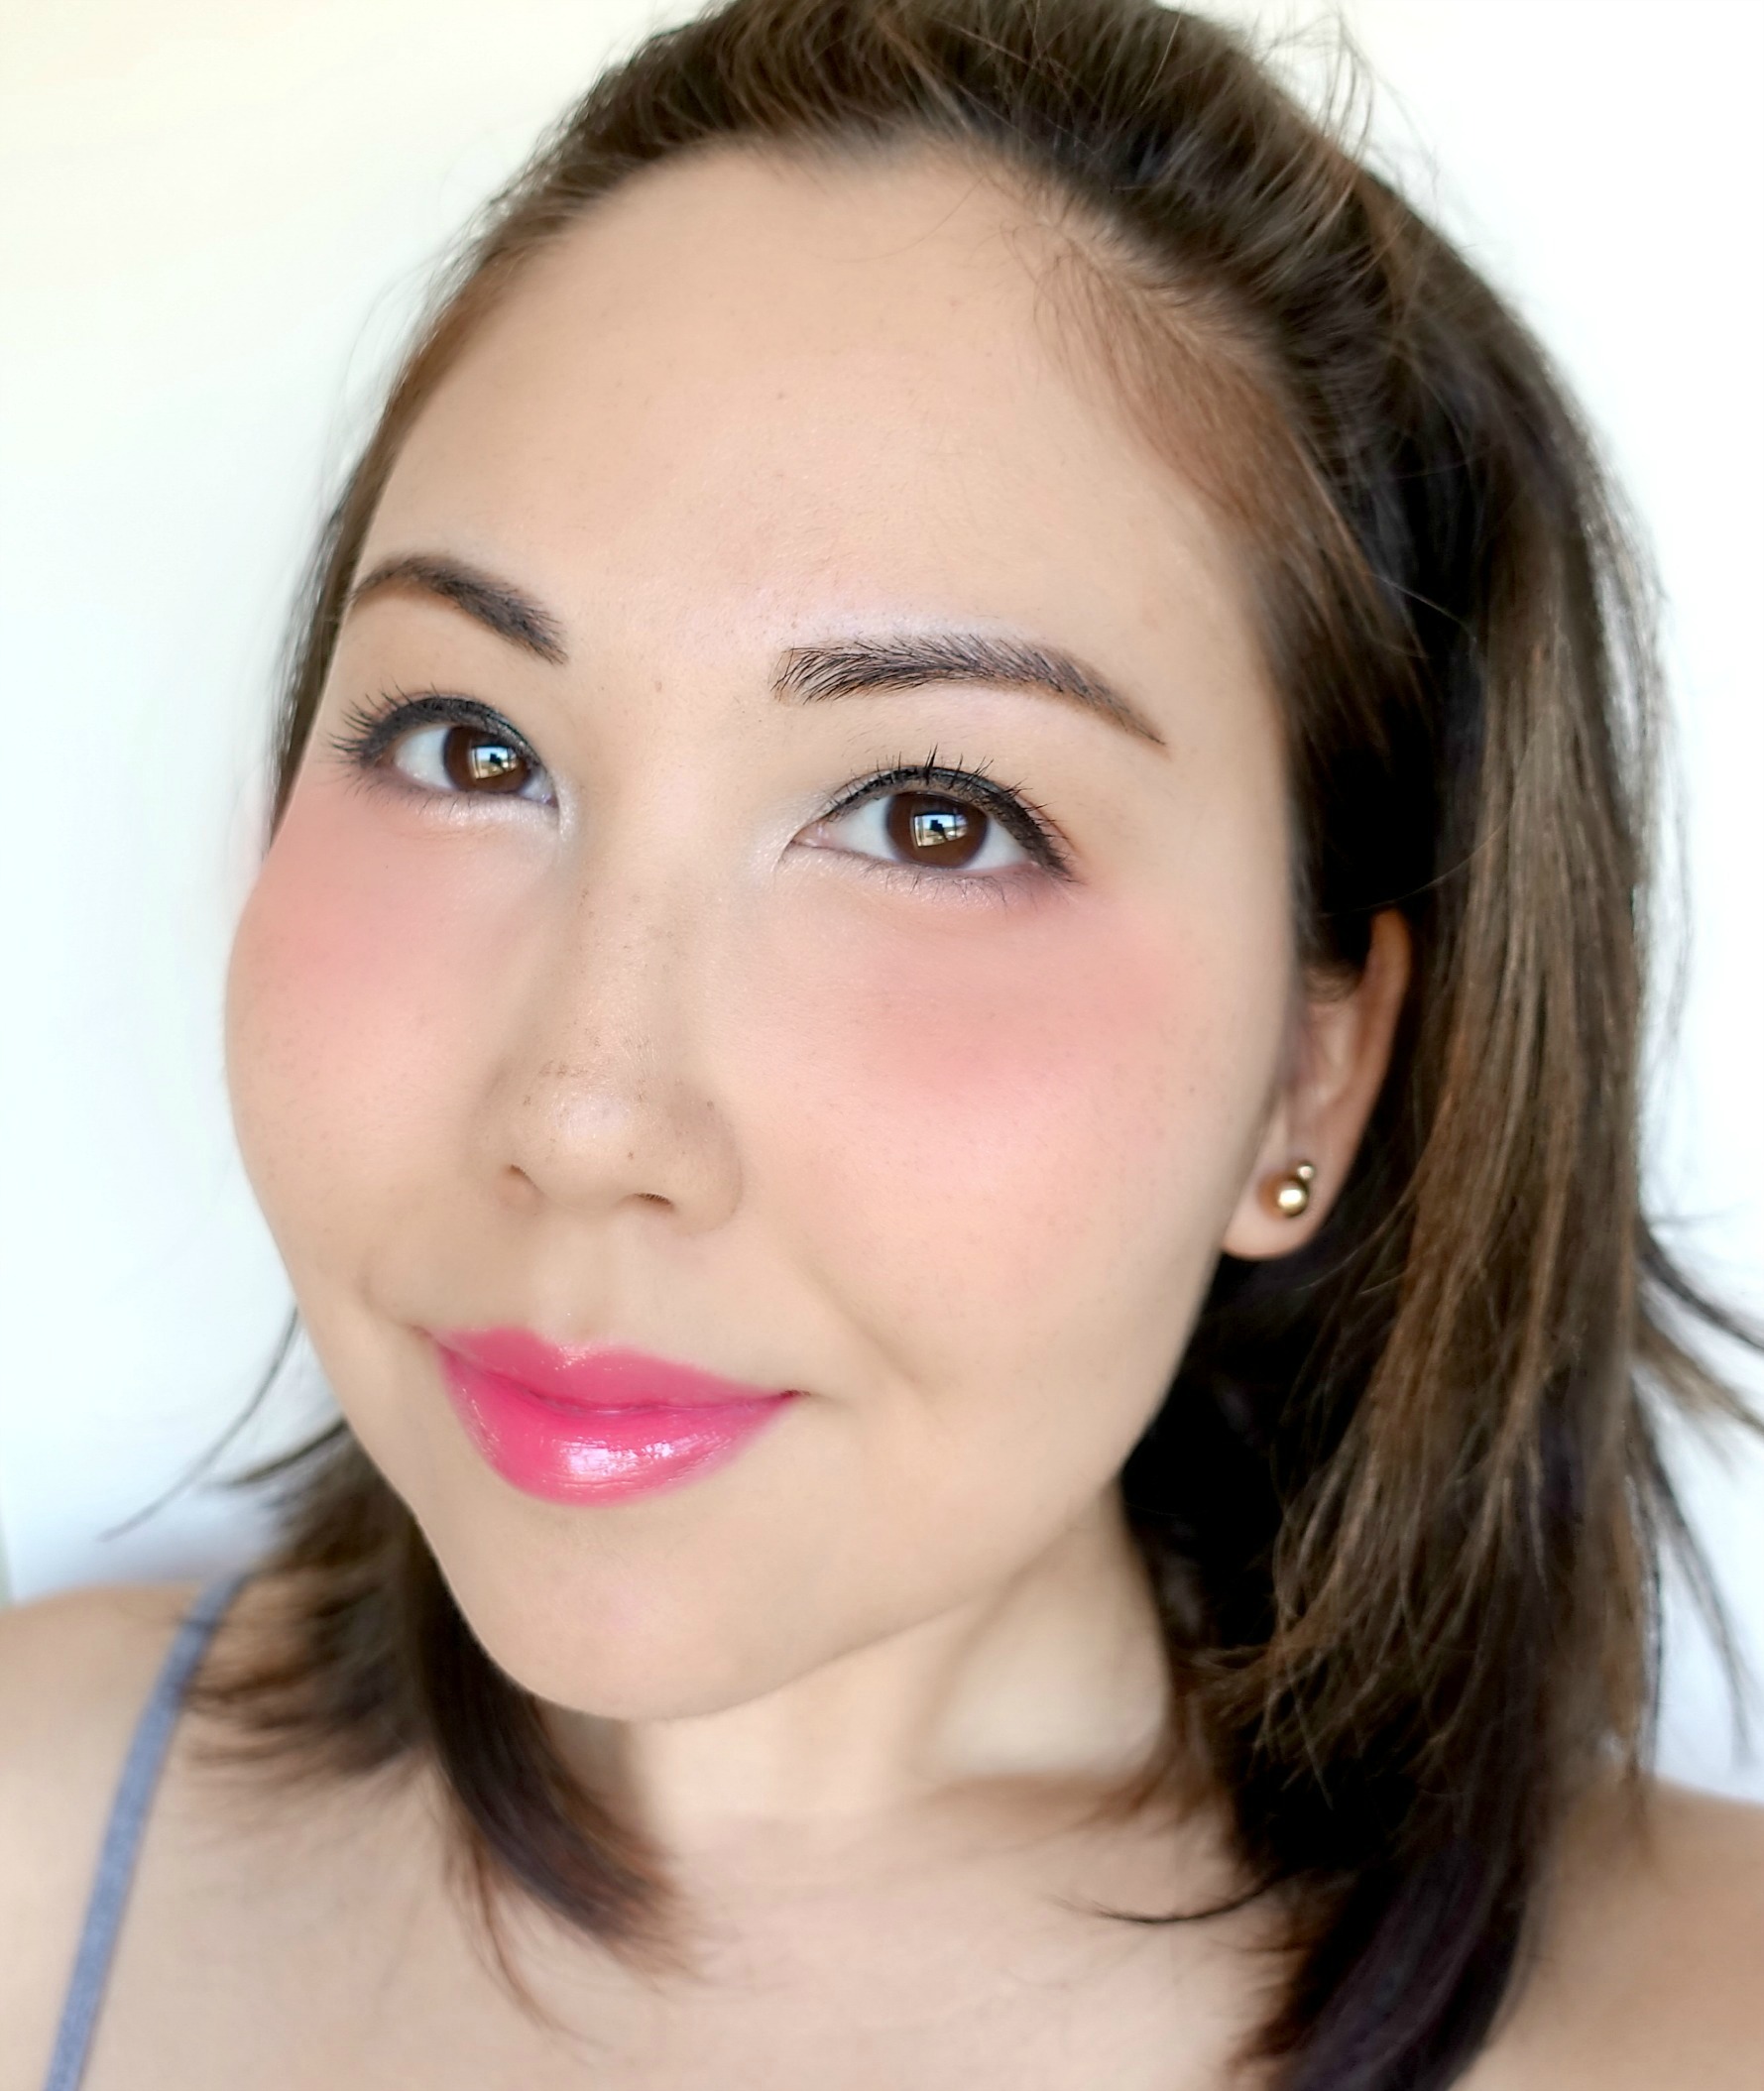 Wearable Japanese Igari "Hangover" Makeup Tutorial